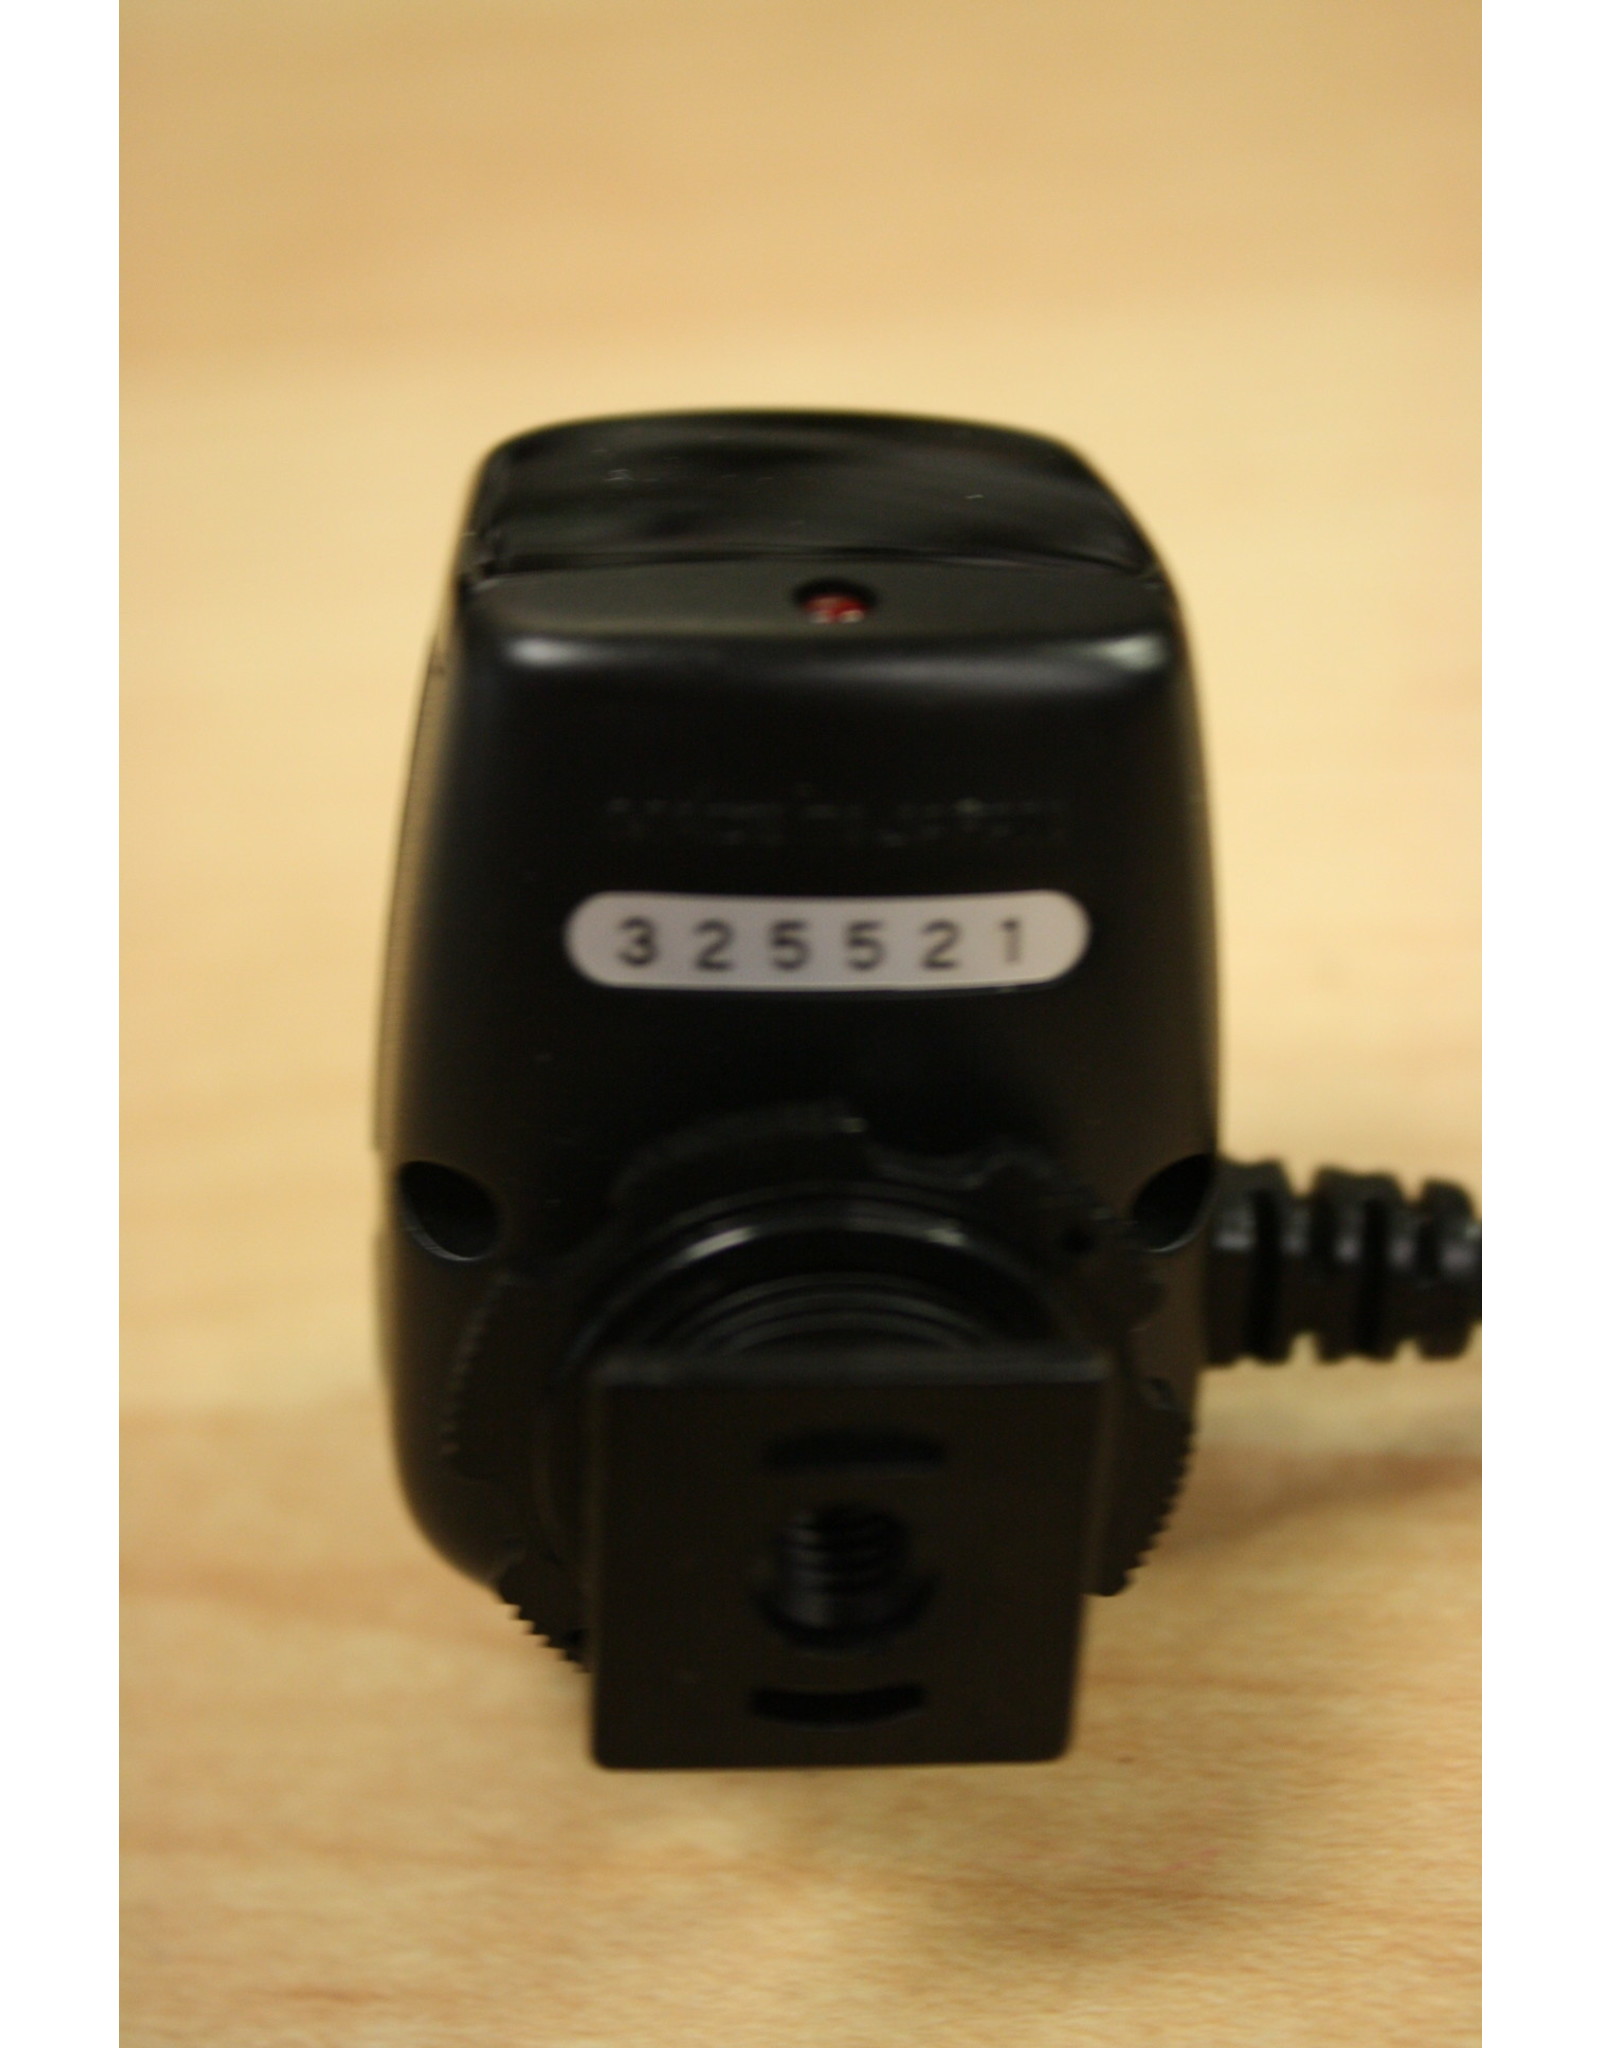 Nikon Nikon ML-3 Remote Control Set (N90/S,F100,F5,F6,D300,D3) (Pre-owned)